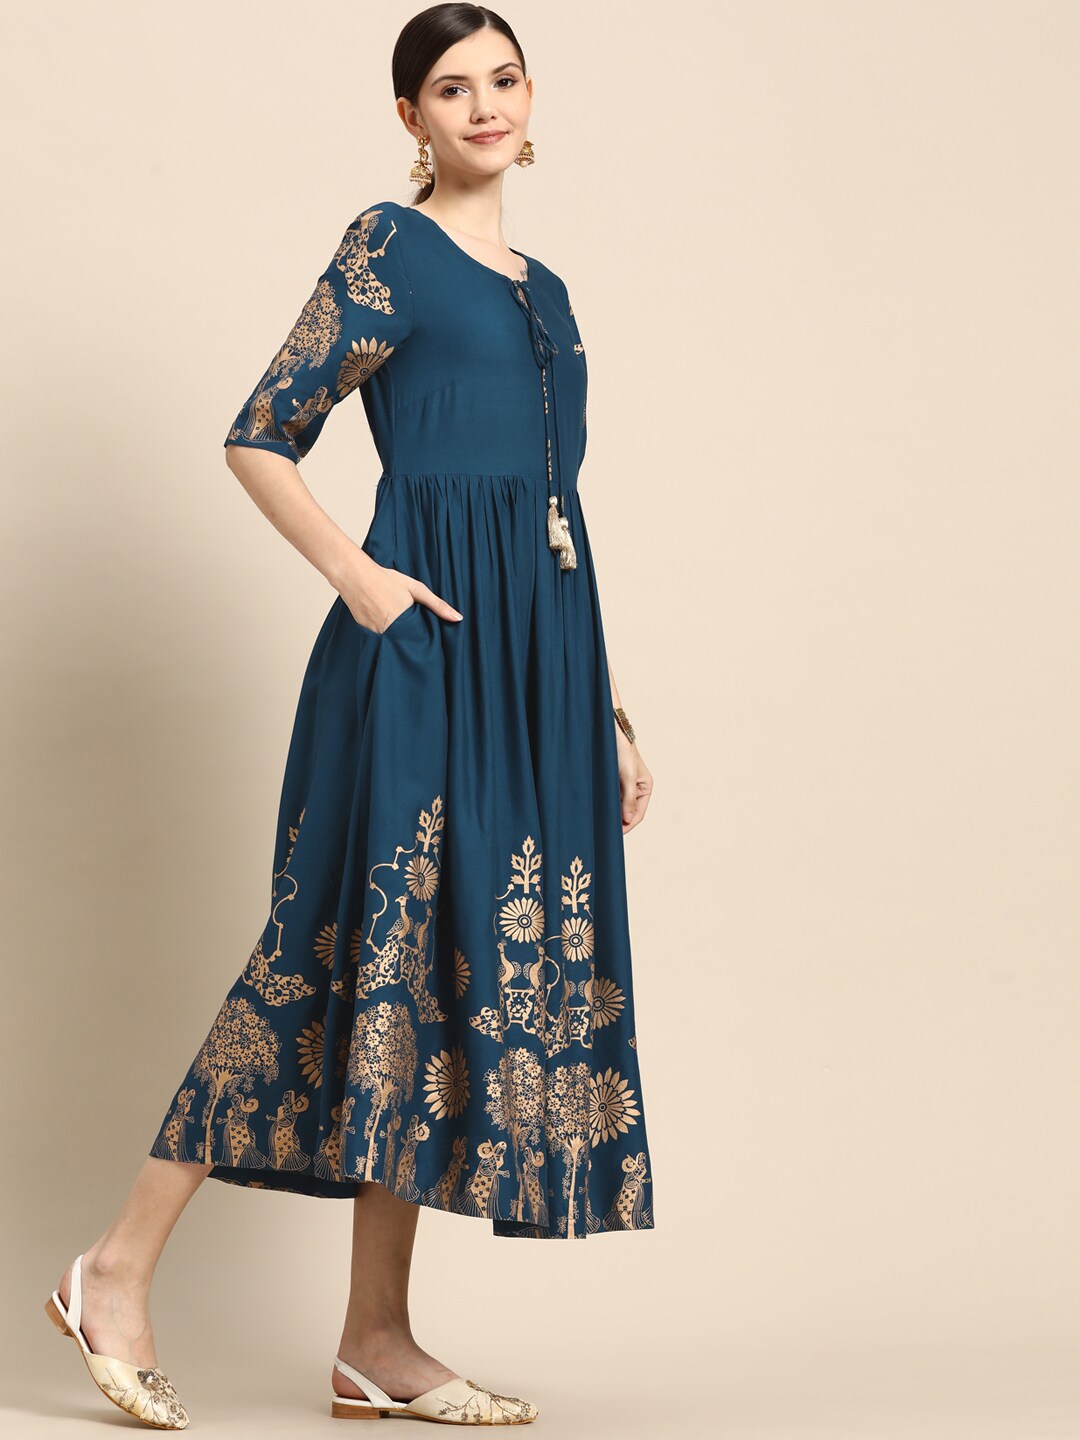 Sangria Blue & Golden Ethnic Motifs Ethnic A-Line Midi Dress Price in India